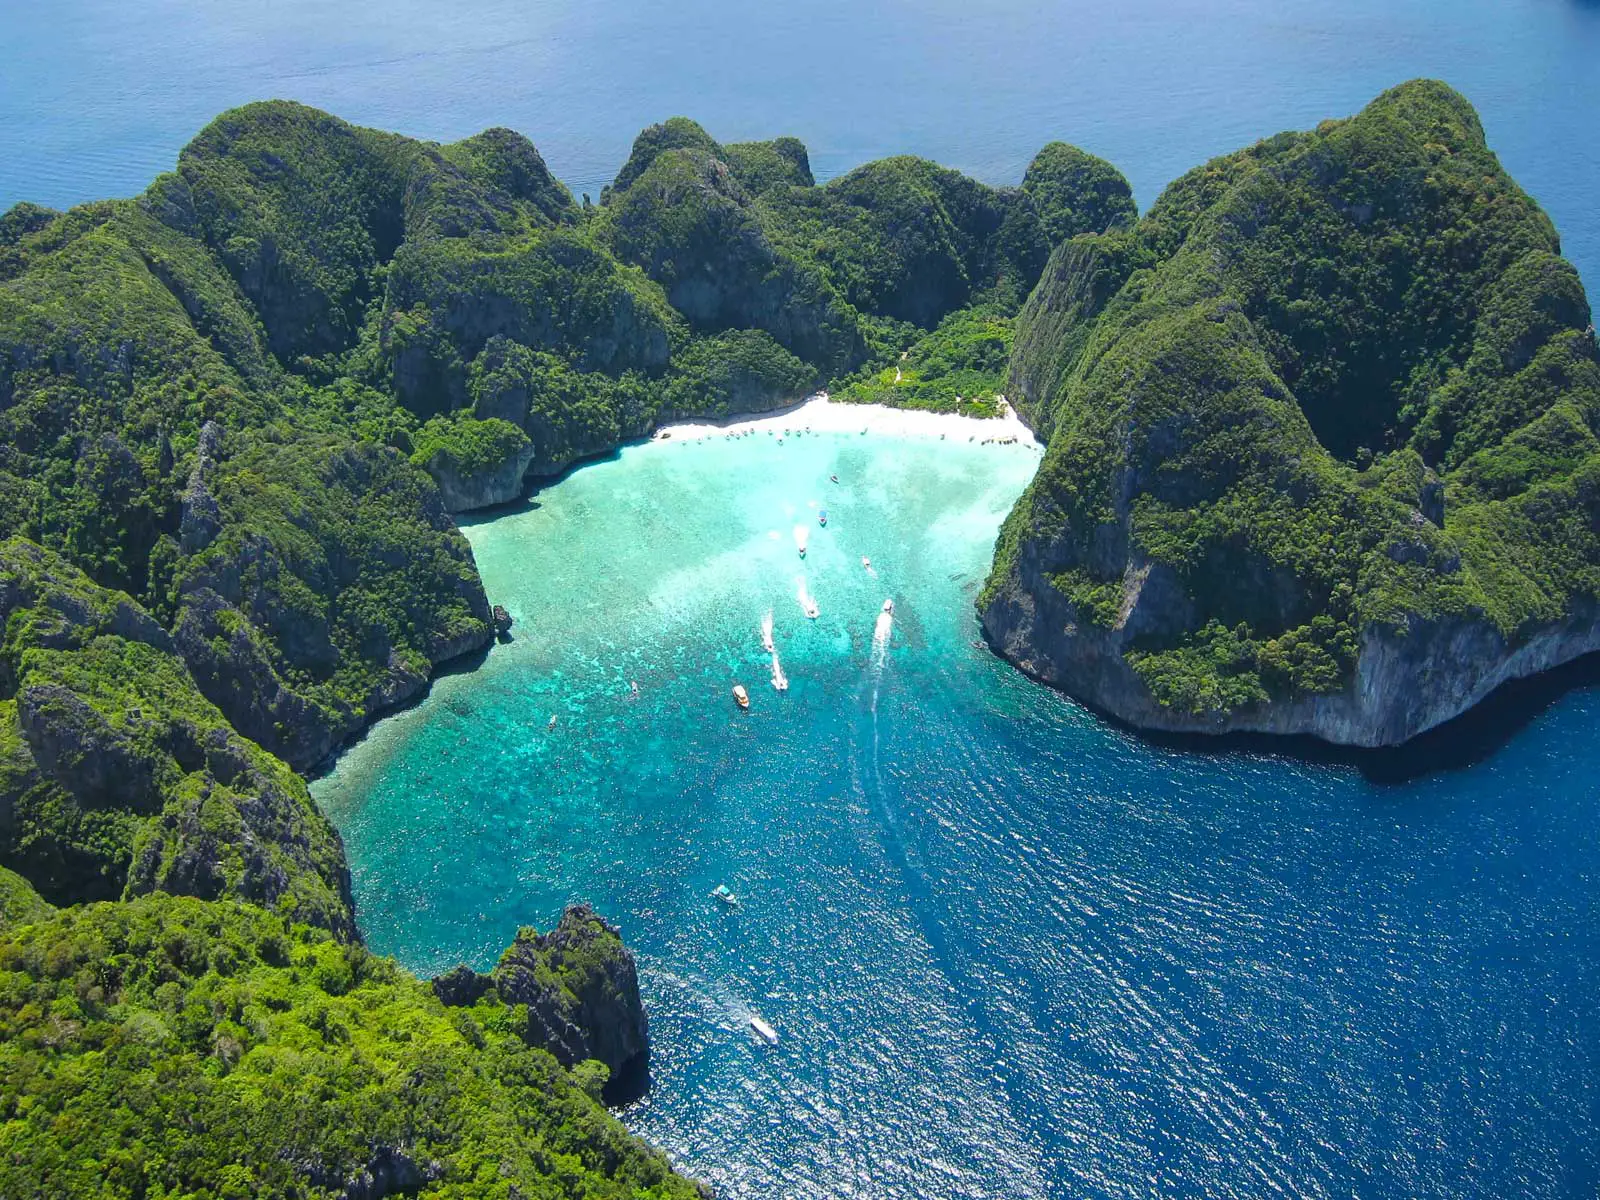 Maya Bay - insula renumita a Thailandei interzisa turistilor 4 luni pe an